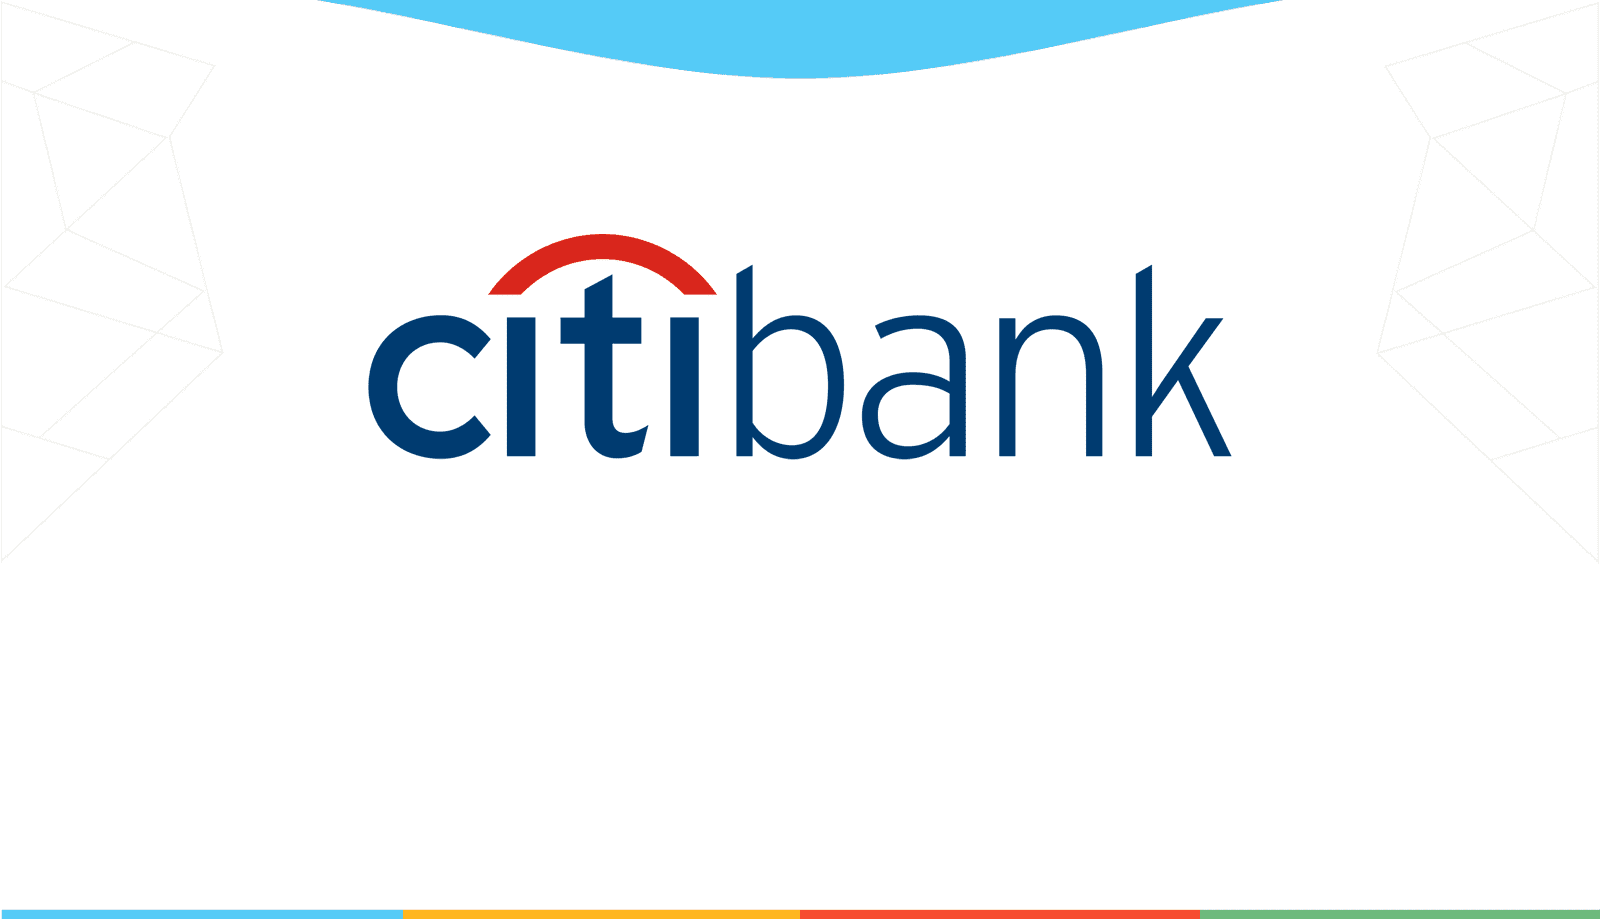 Sit bank. Ситибанк. Ситибанк логотип. Citibank экосистема. Ситибанк логотип 2021.